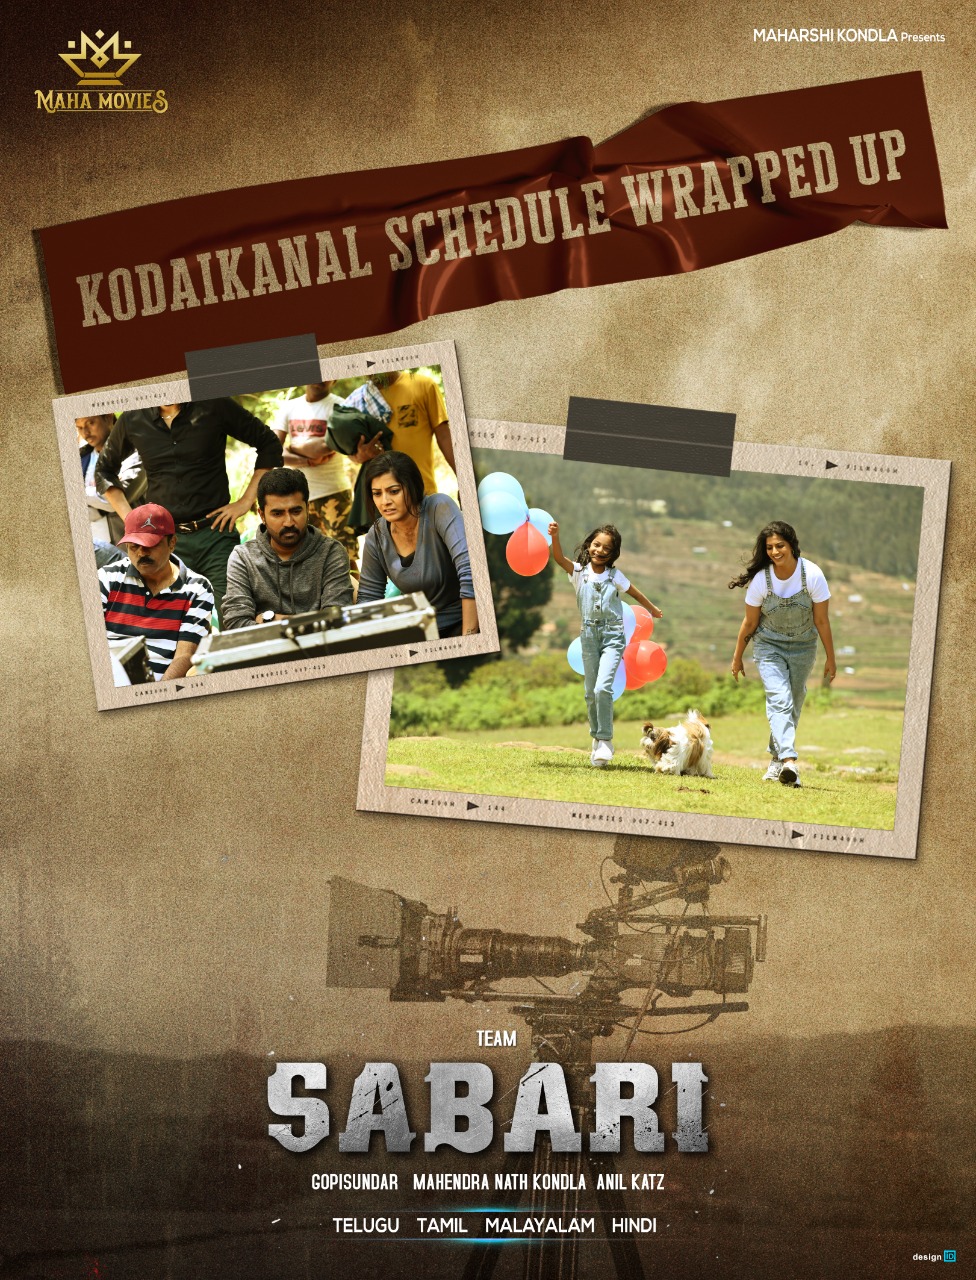 Varalaxmi Sarathkumar “Sabari” Completes Key Schedule in Kodaikanal